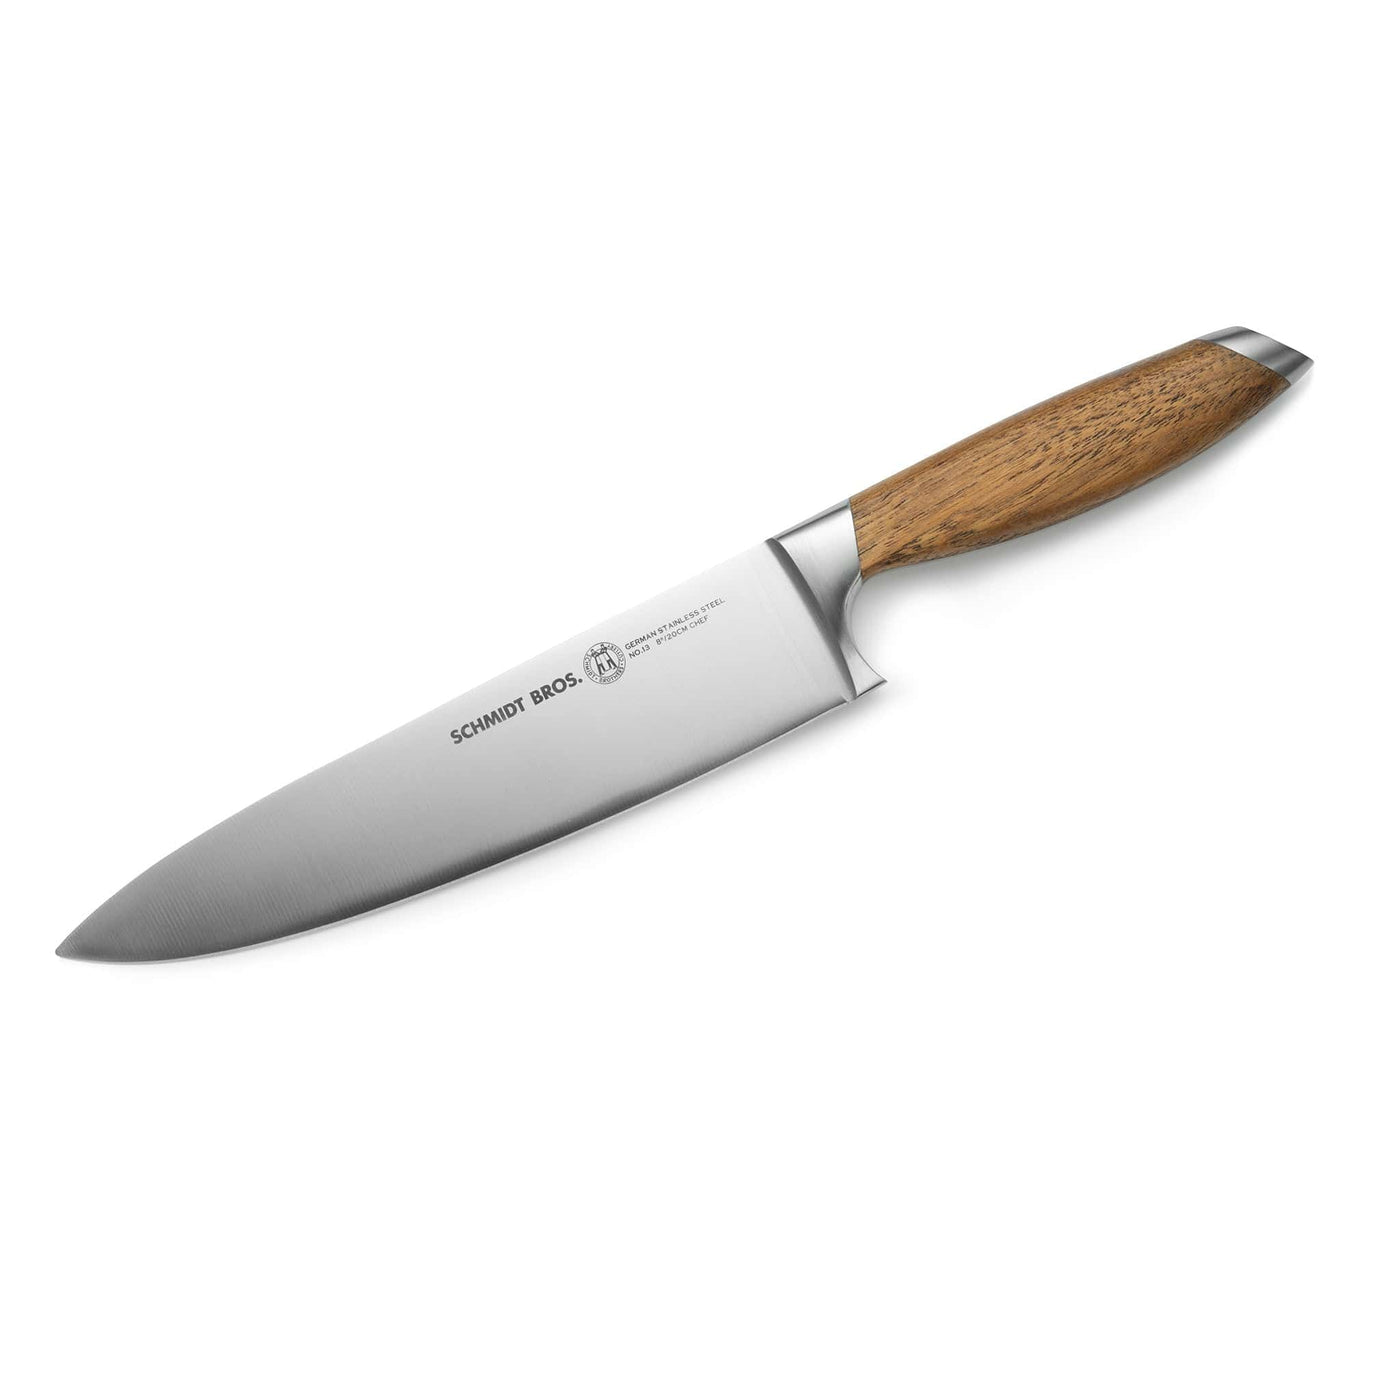 Schmidt Brothers Cutlery Bonded Teak 7-Piece Knife Block Set